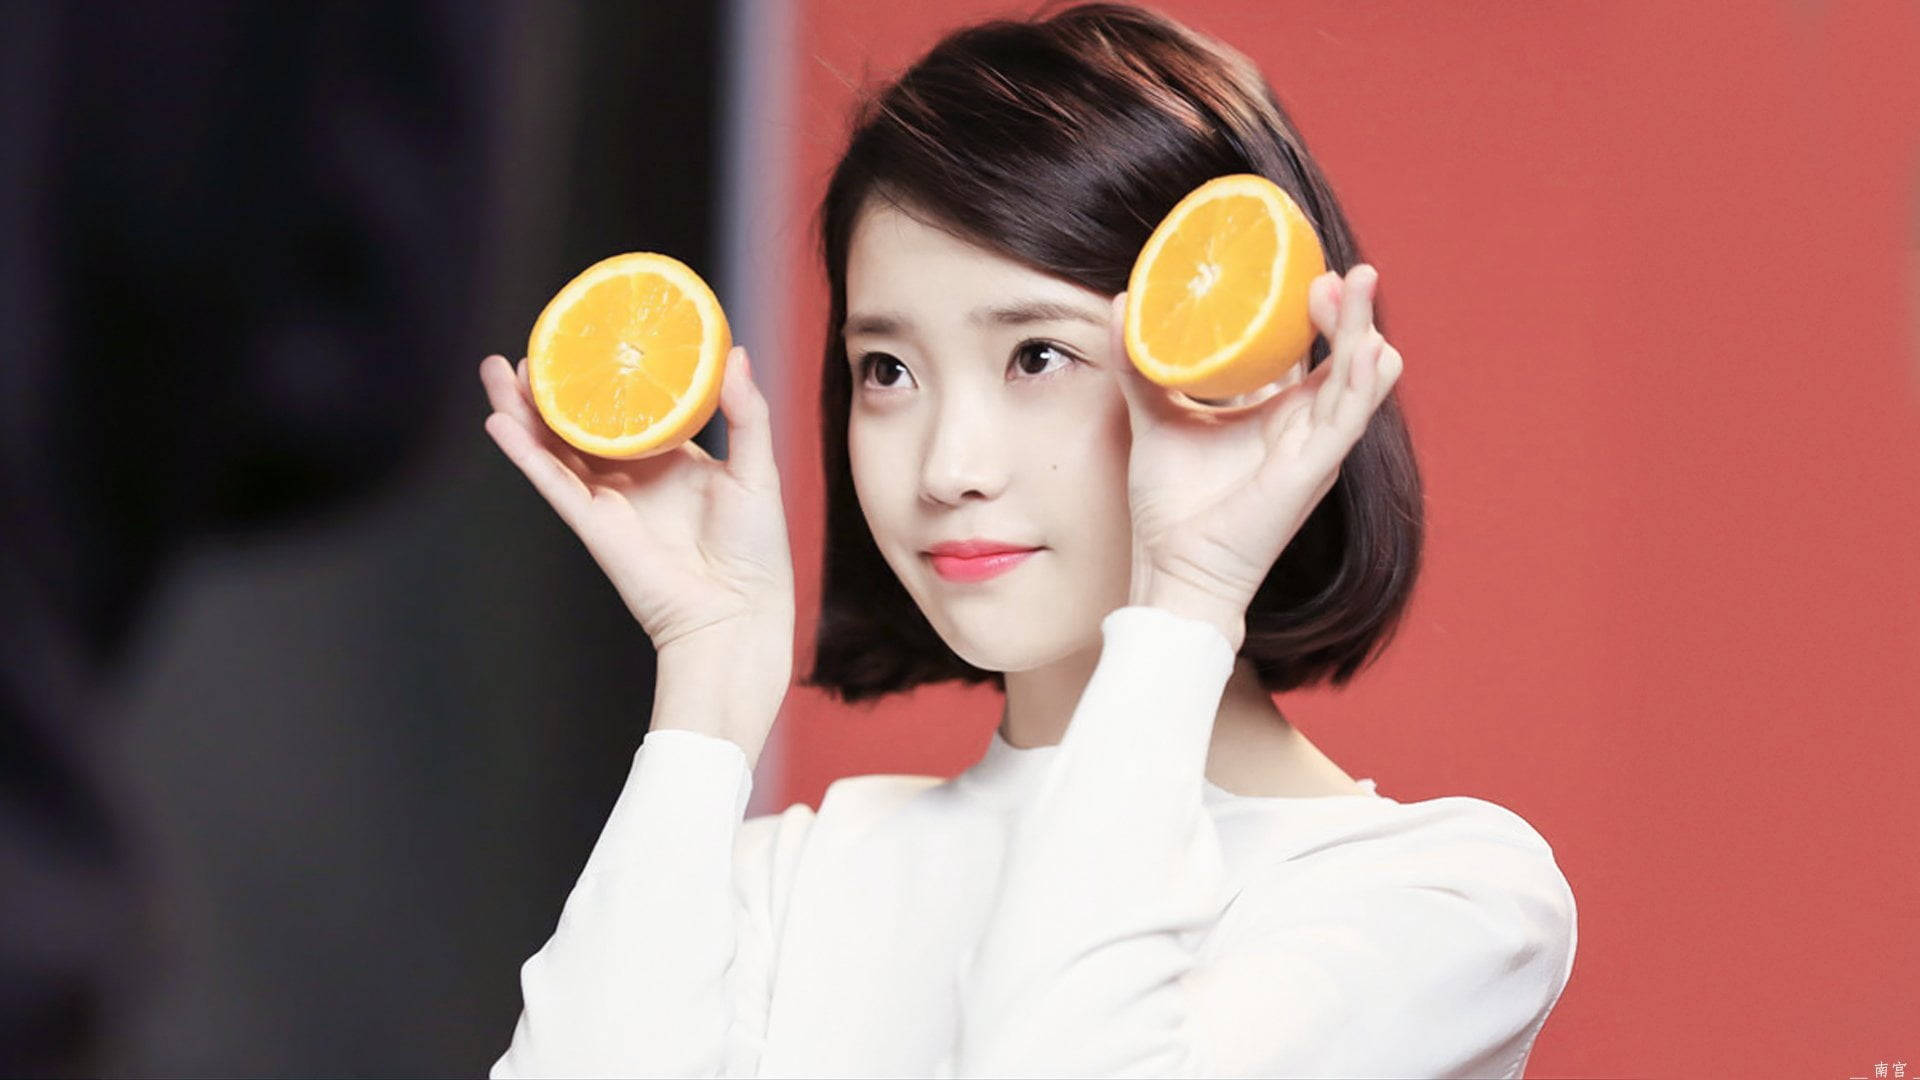 Iu Presenting An Orange